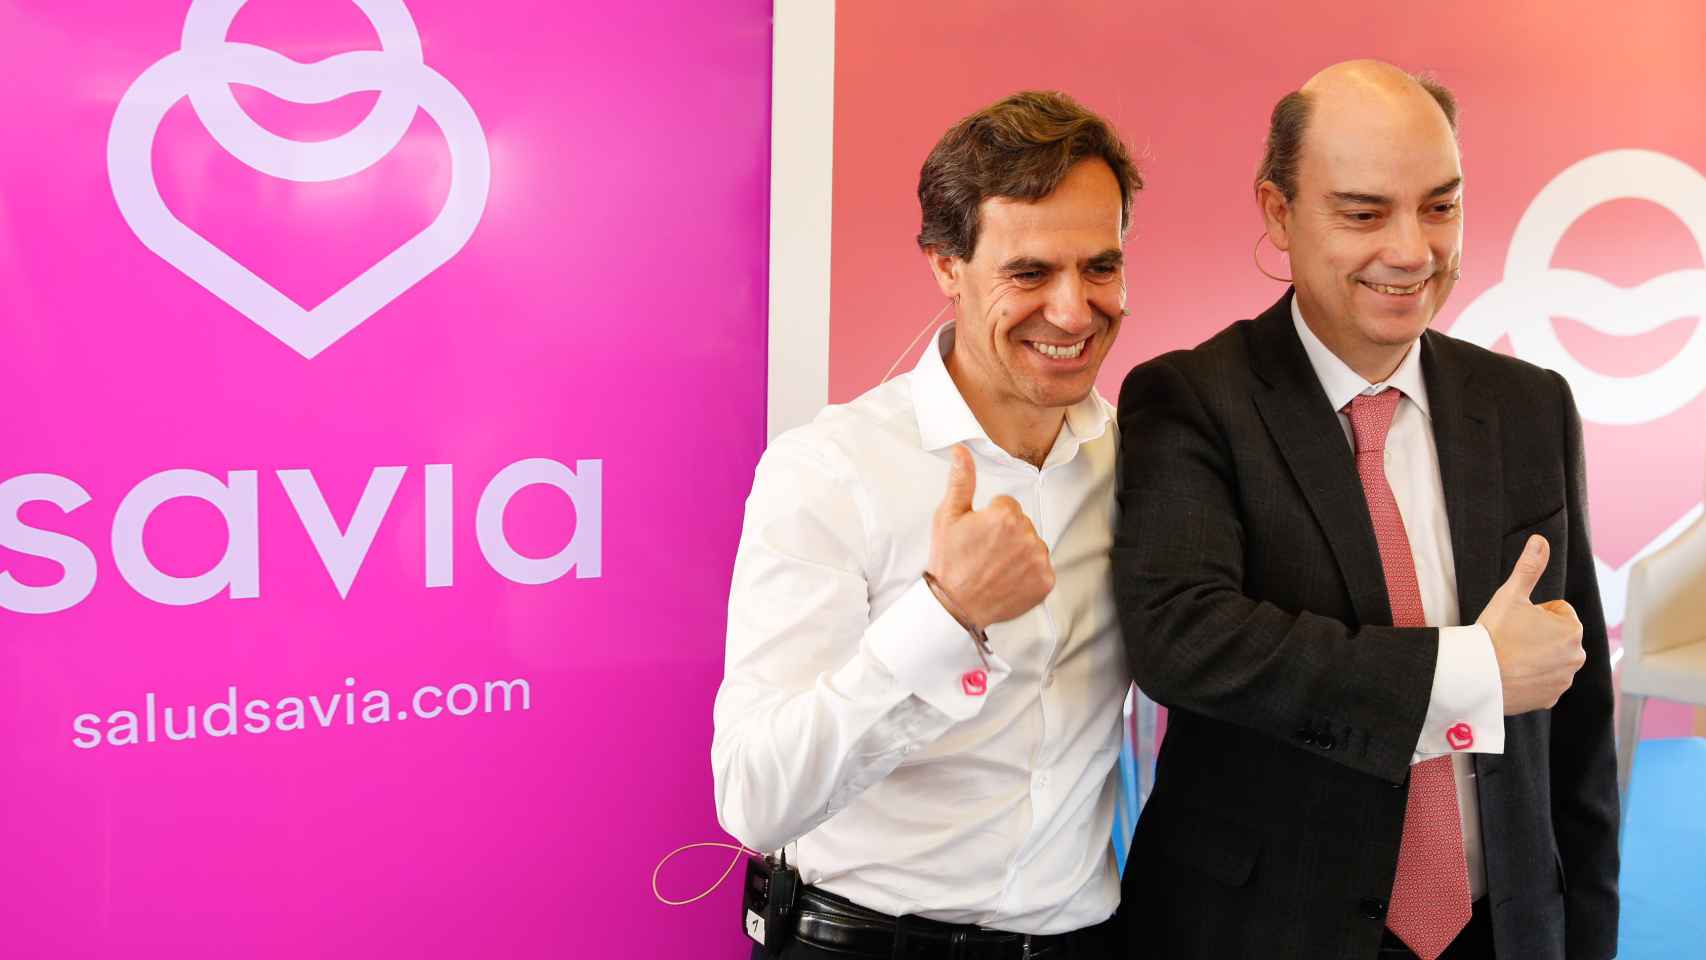 Pedro Díaz Yuste, CEO de Savia, junto con Jose Manuel Inchausti, CEO regional Iberia de Mapfre.